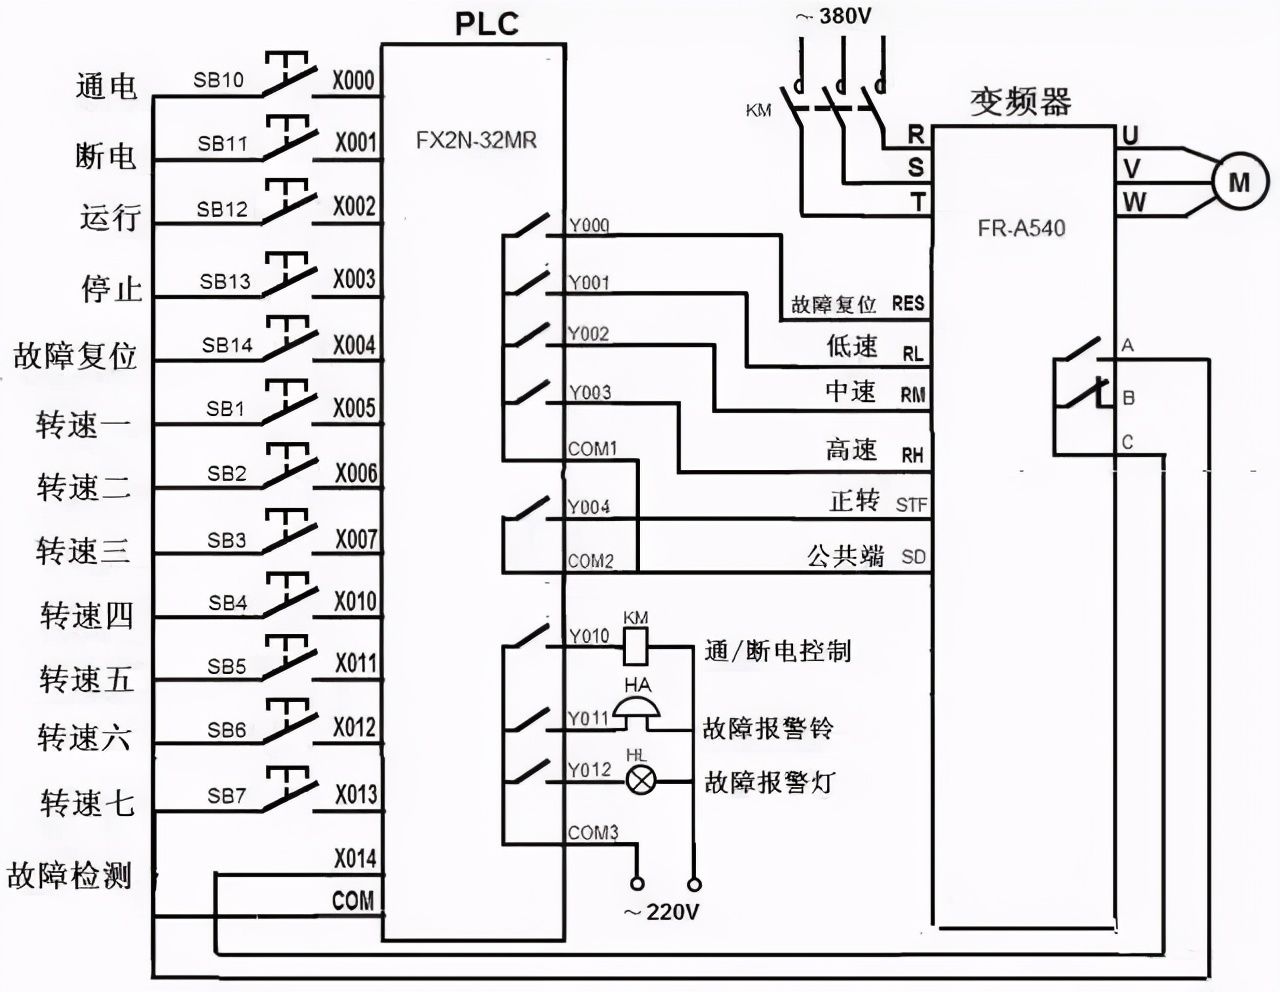 plc与变频器接线图（图解PLC与变频器通讯接线）-第18张图片